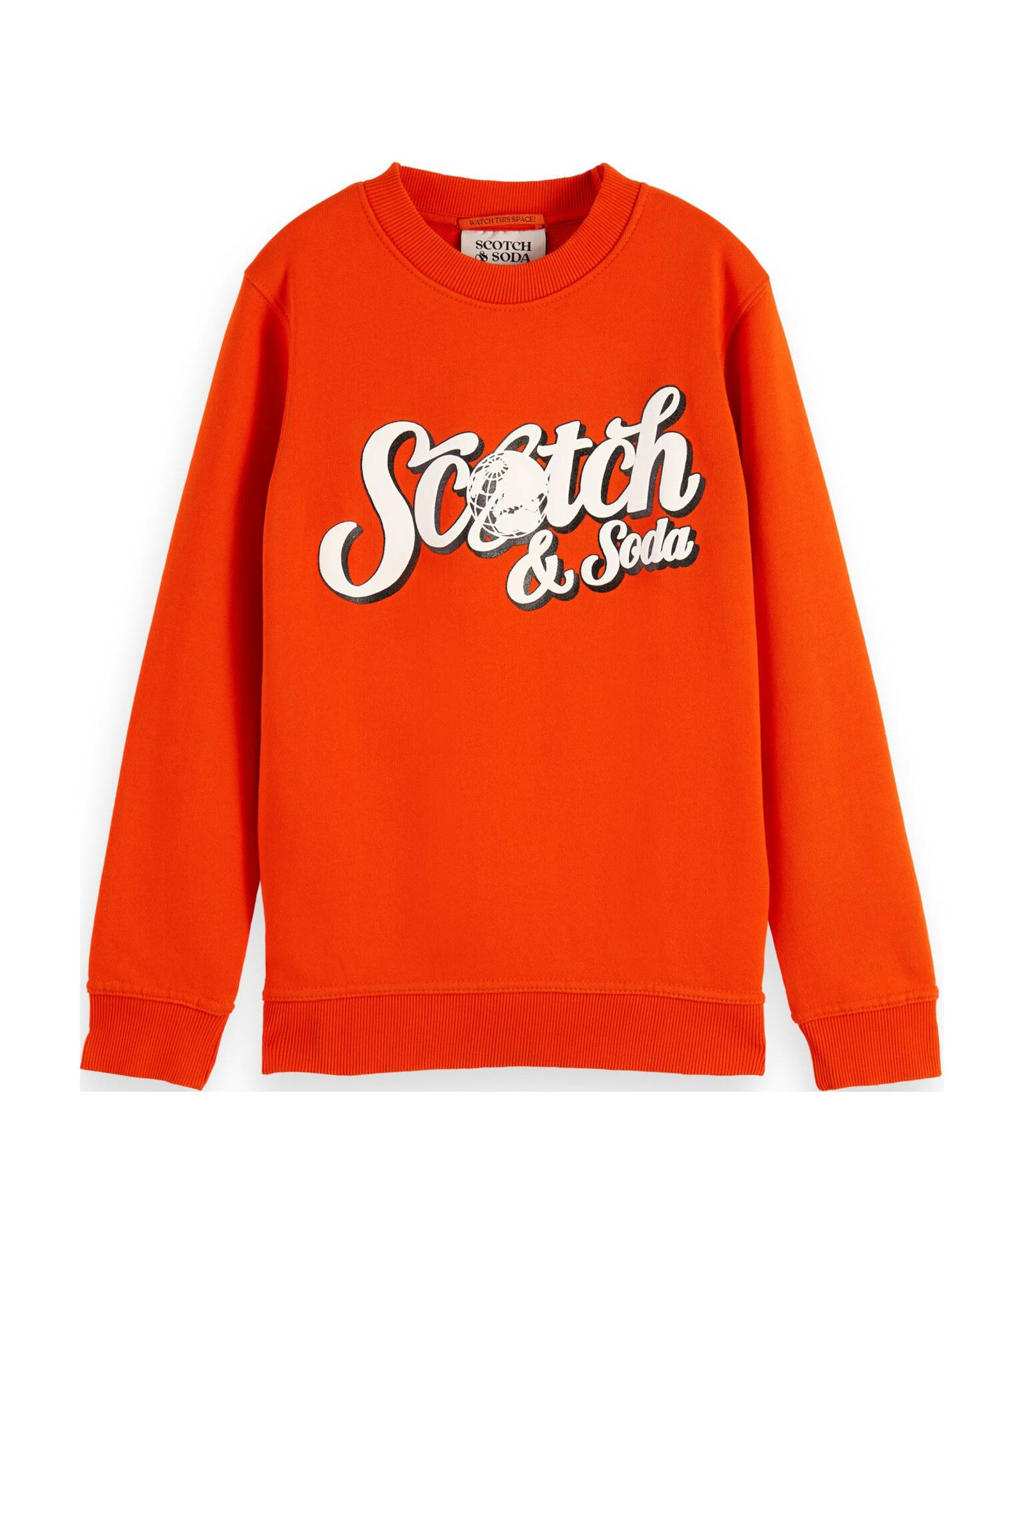 Scotch & Soda sweater met logo rood